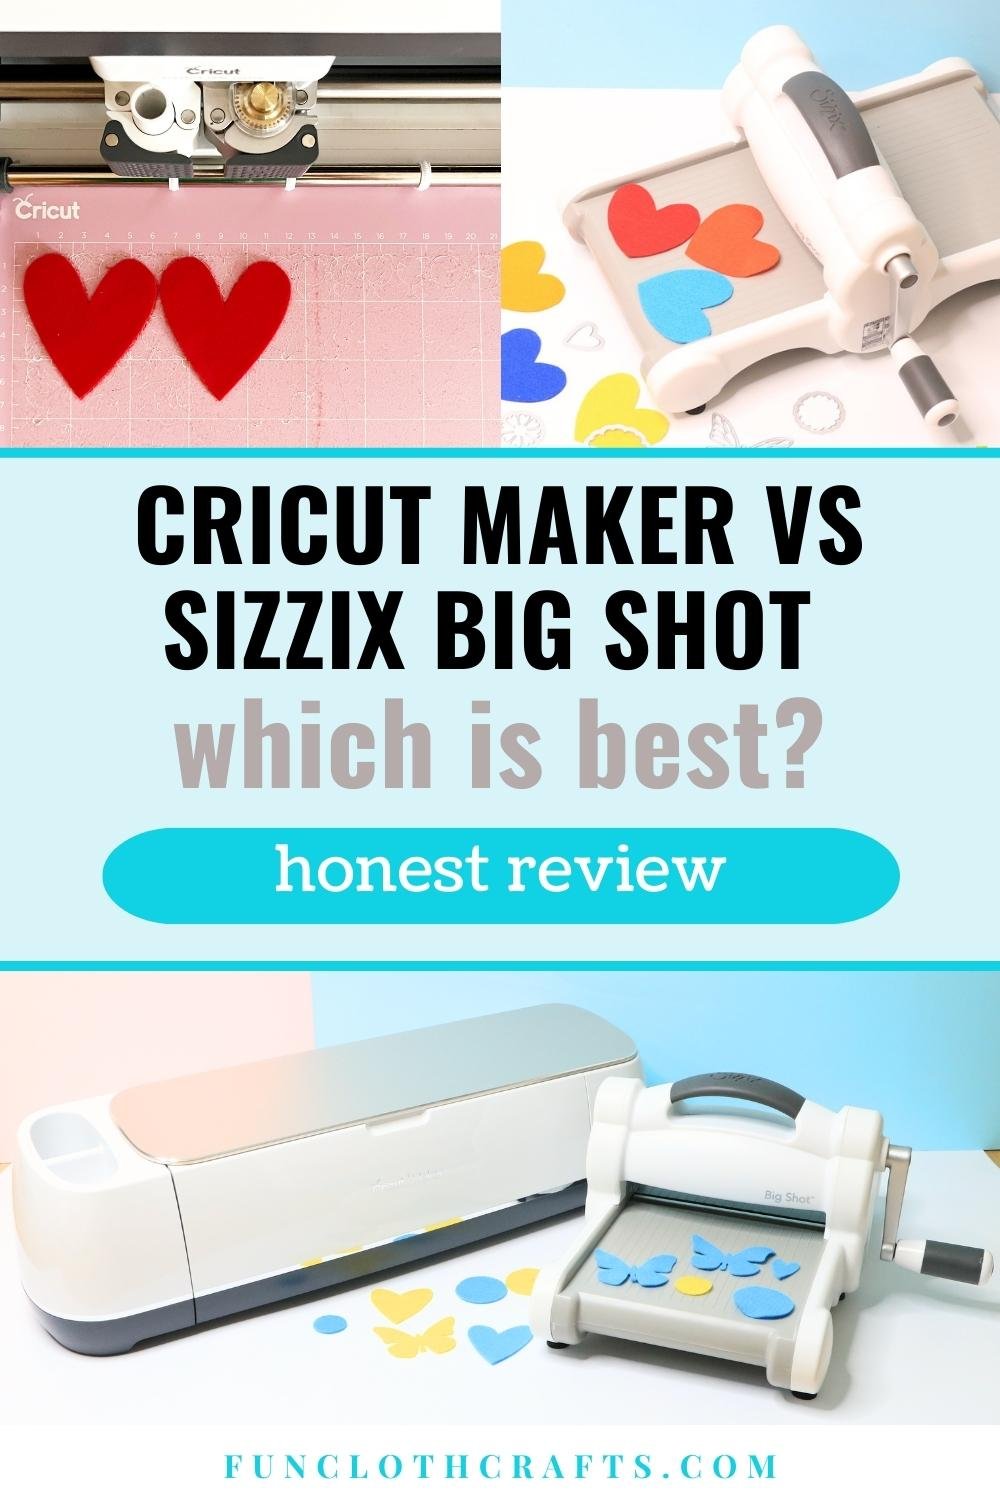 Cricut vs Sizzix - Which Die Cut Machine Is Better?